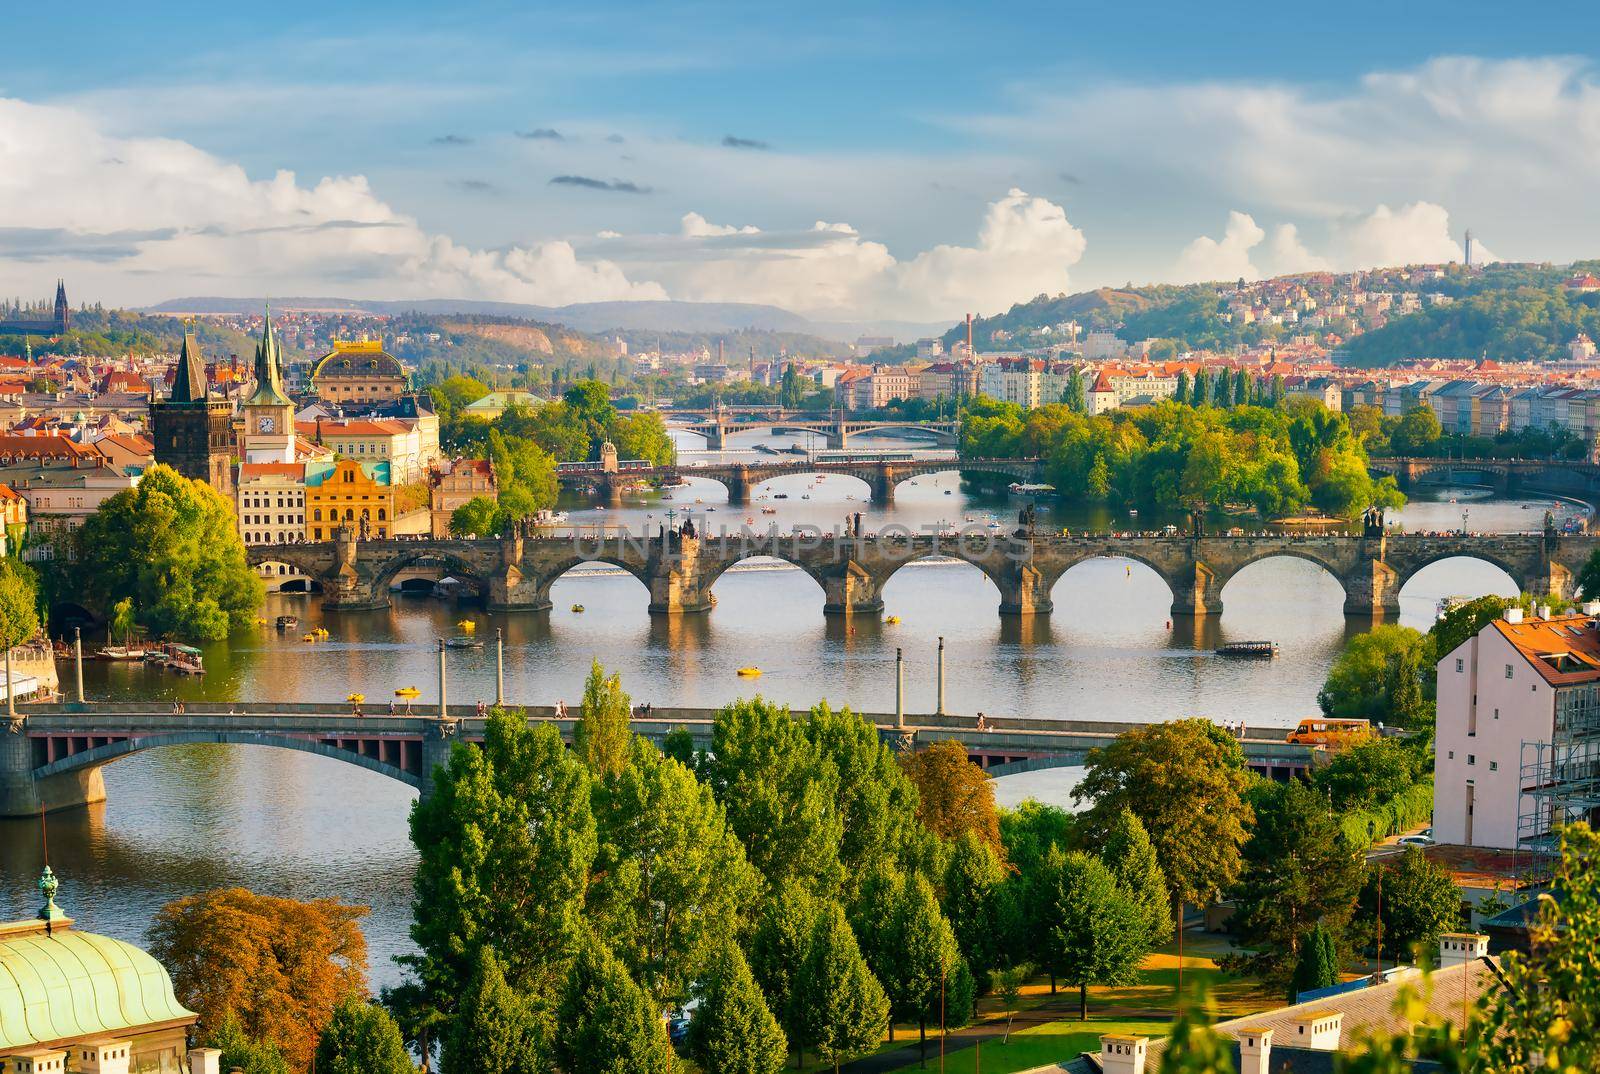 Bridges in Prague by Givaga